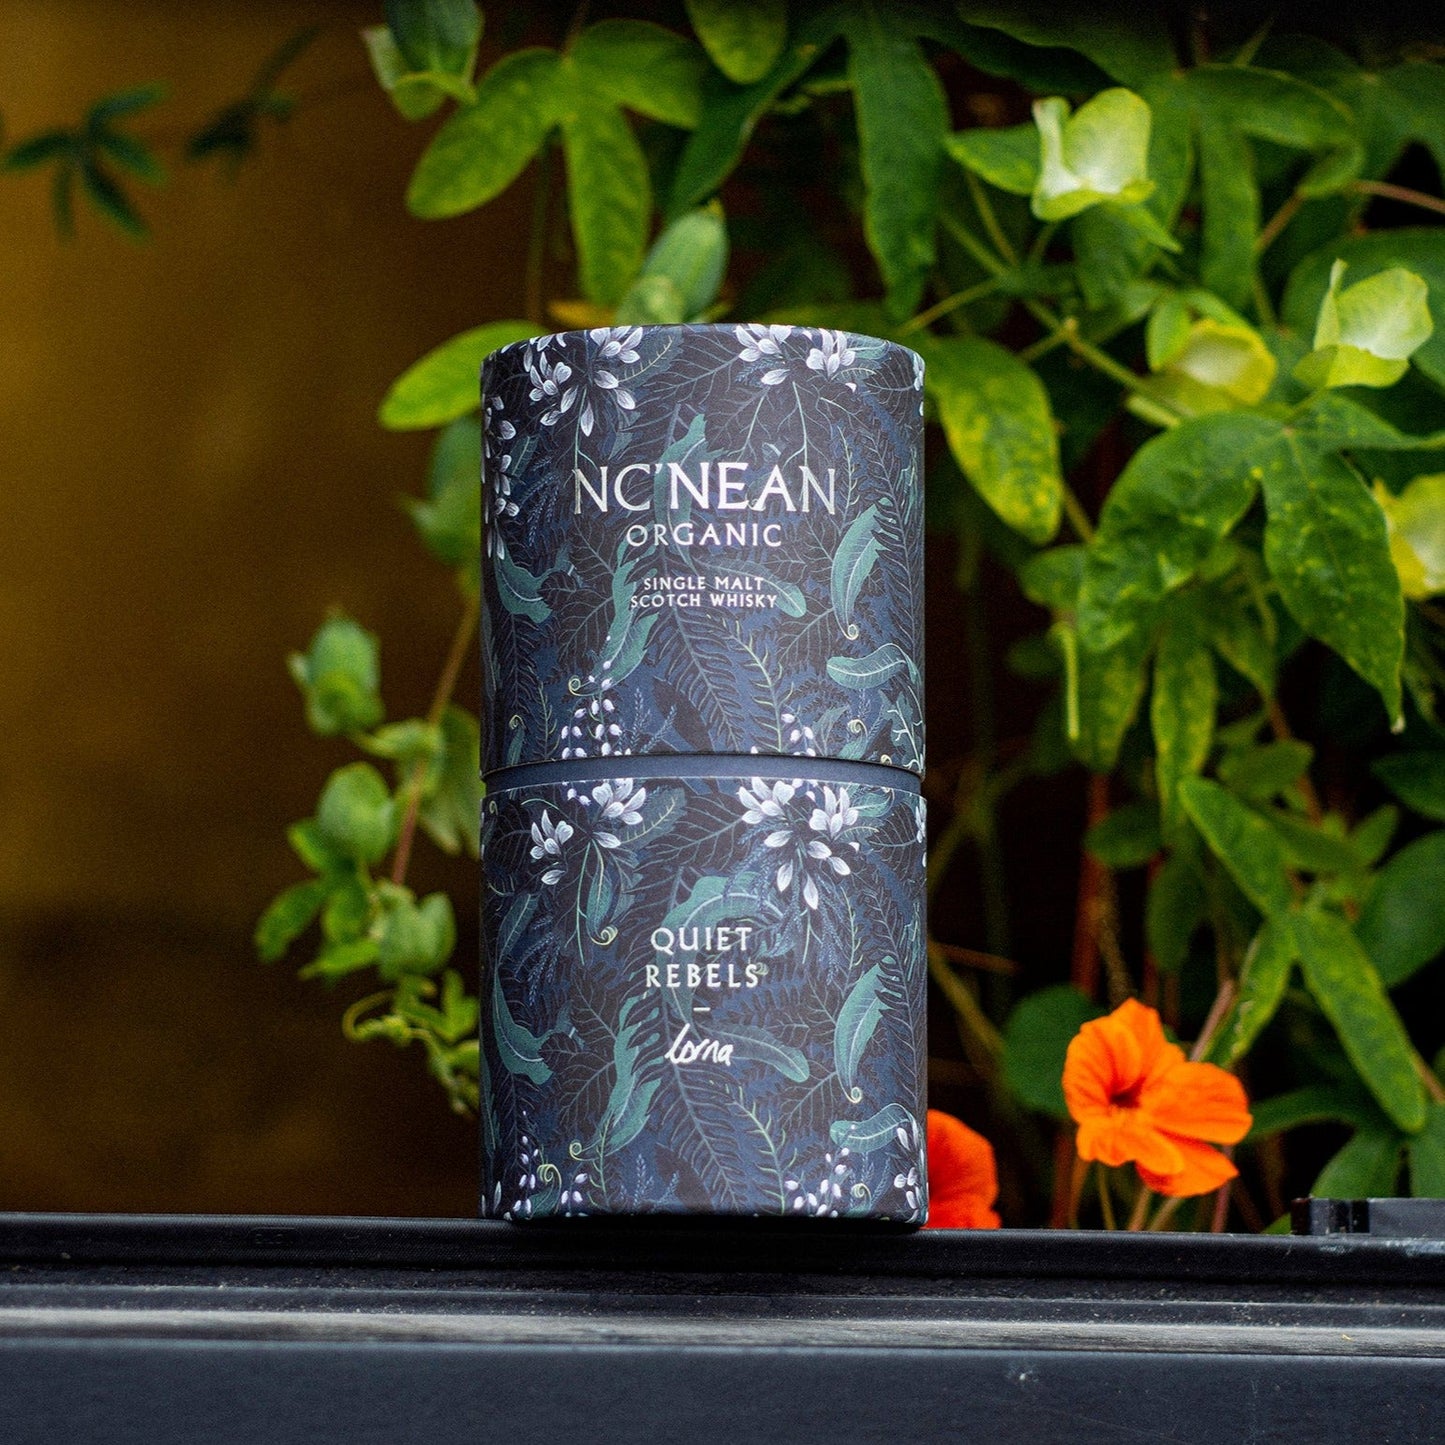 Nc'Nean | Quiet Rebels – Lorna | Organic Single Malt Scotch Whisky | 0,7l | 48,5%GET A BOTTLE